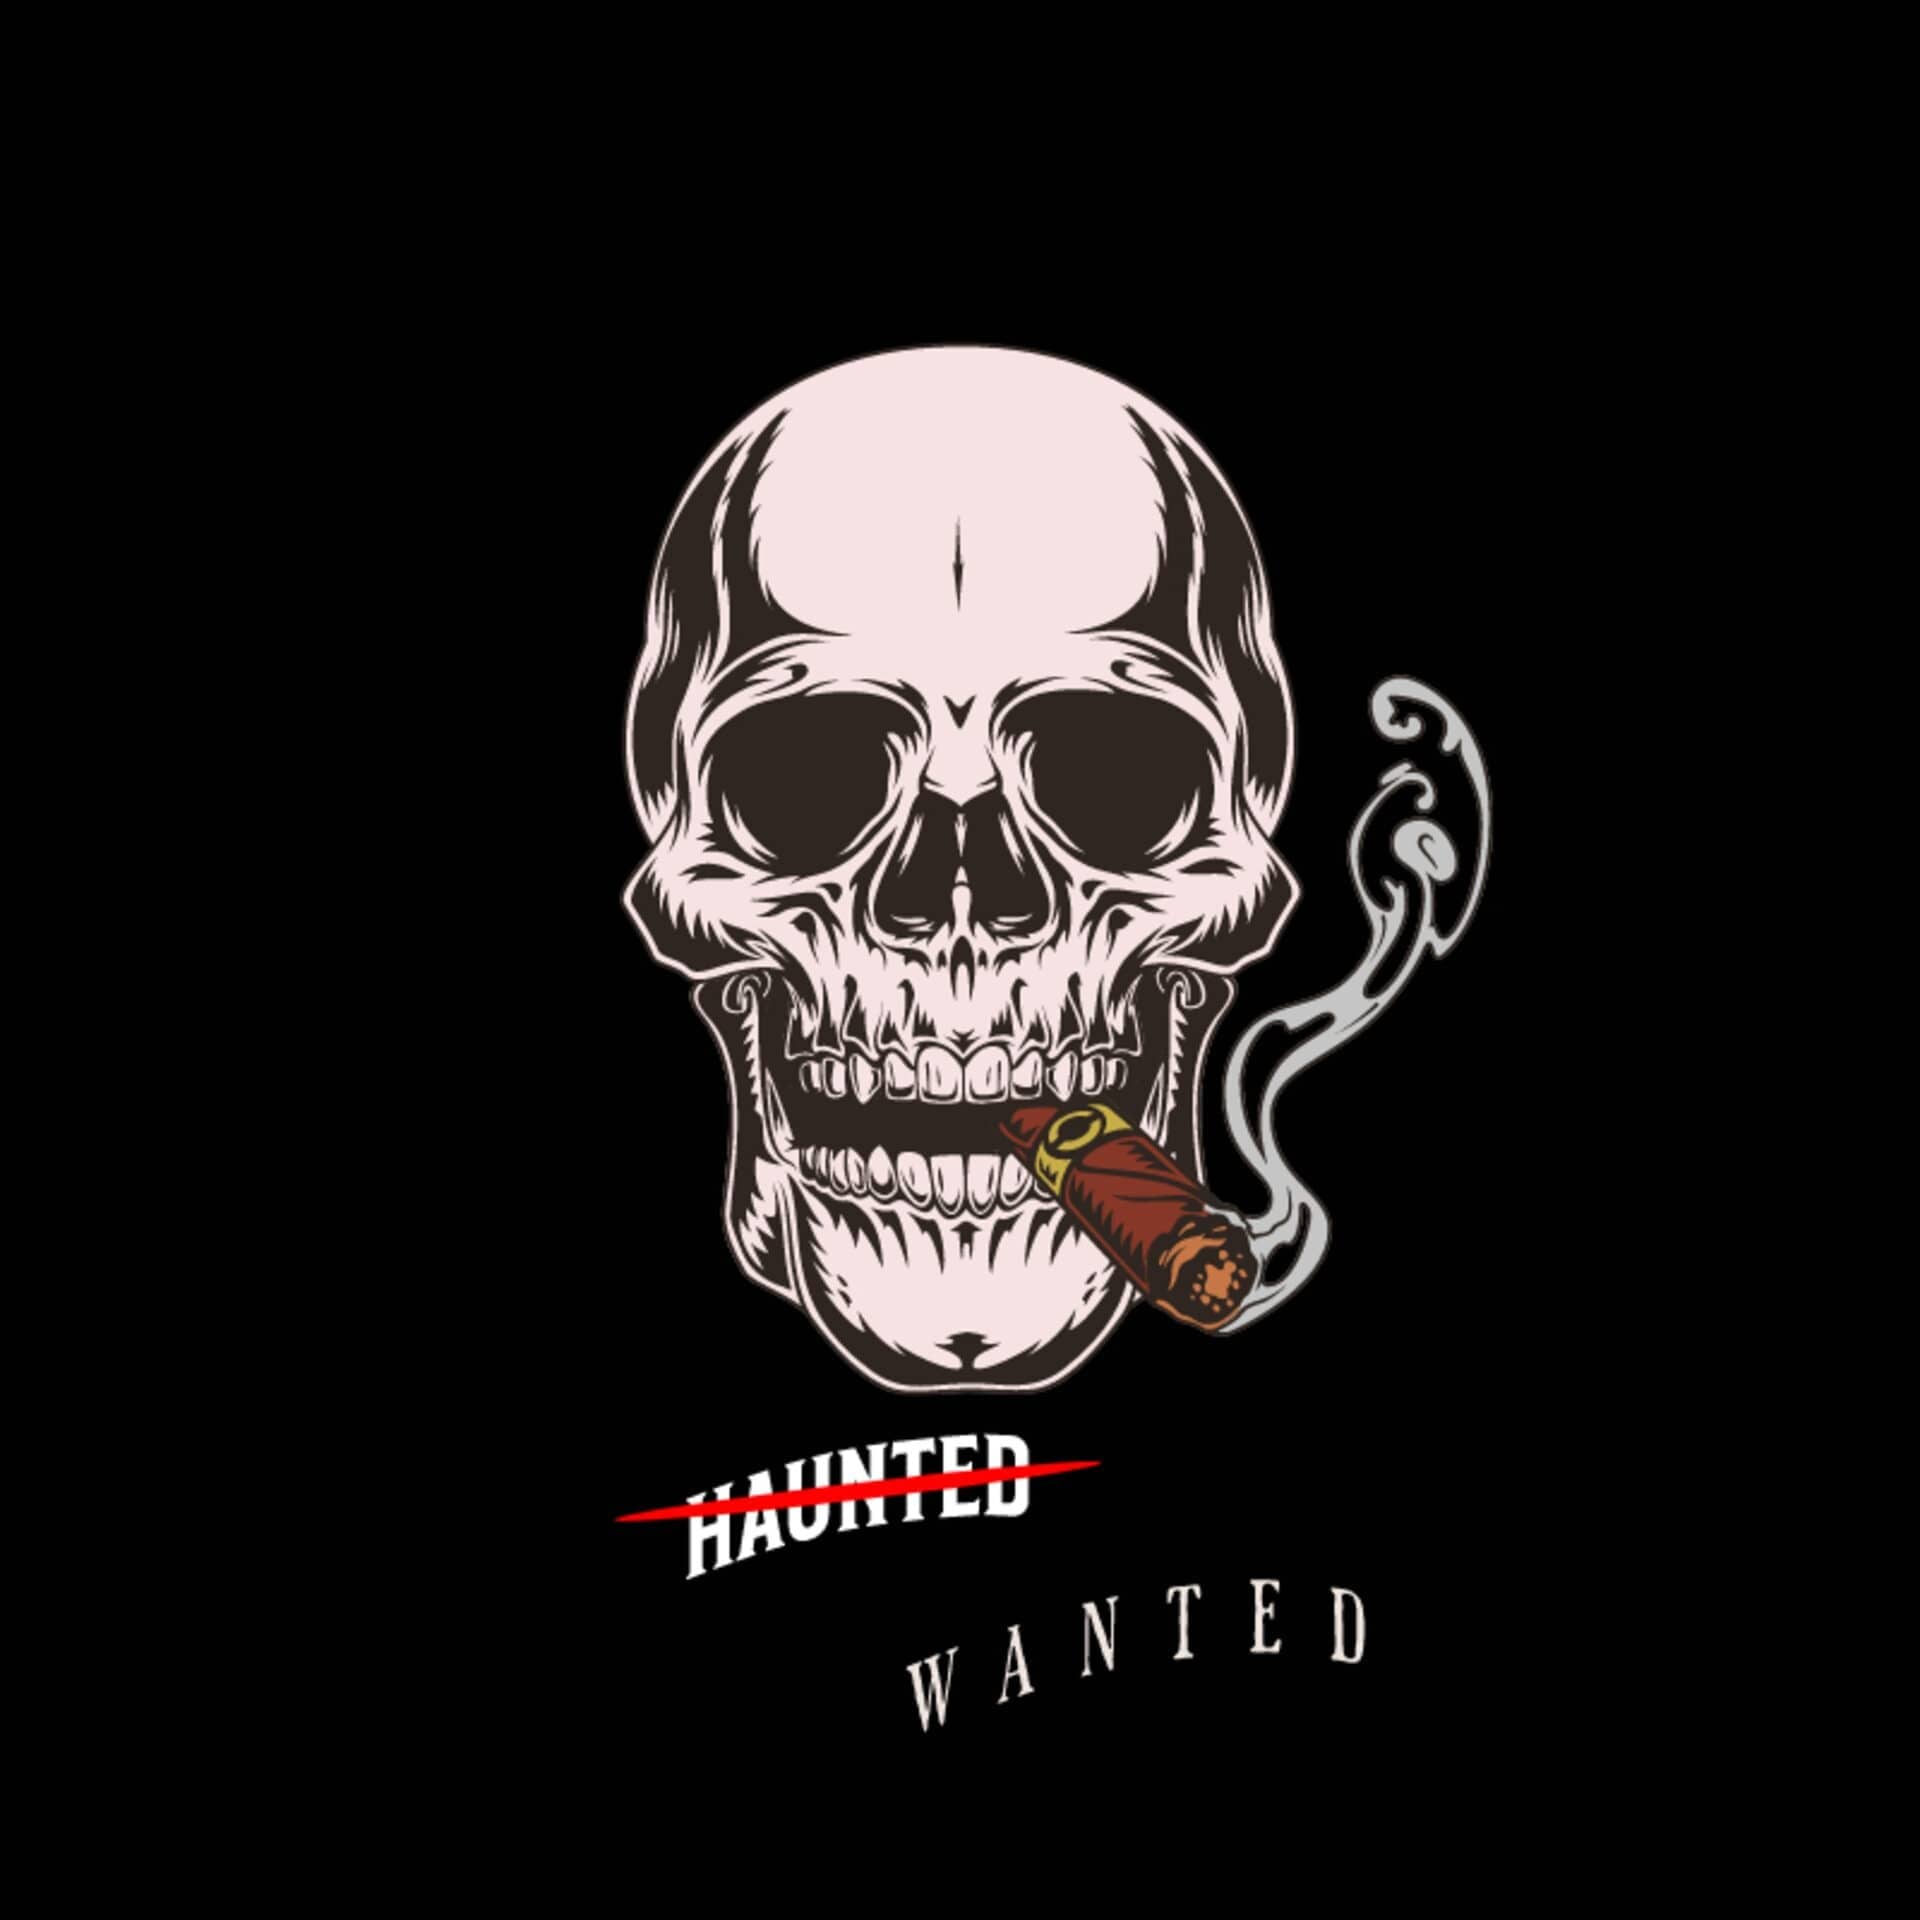 Witch Halloween Skull T-shirt Design pinterest image.